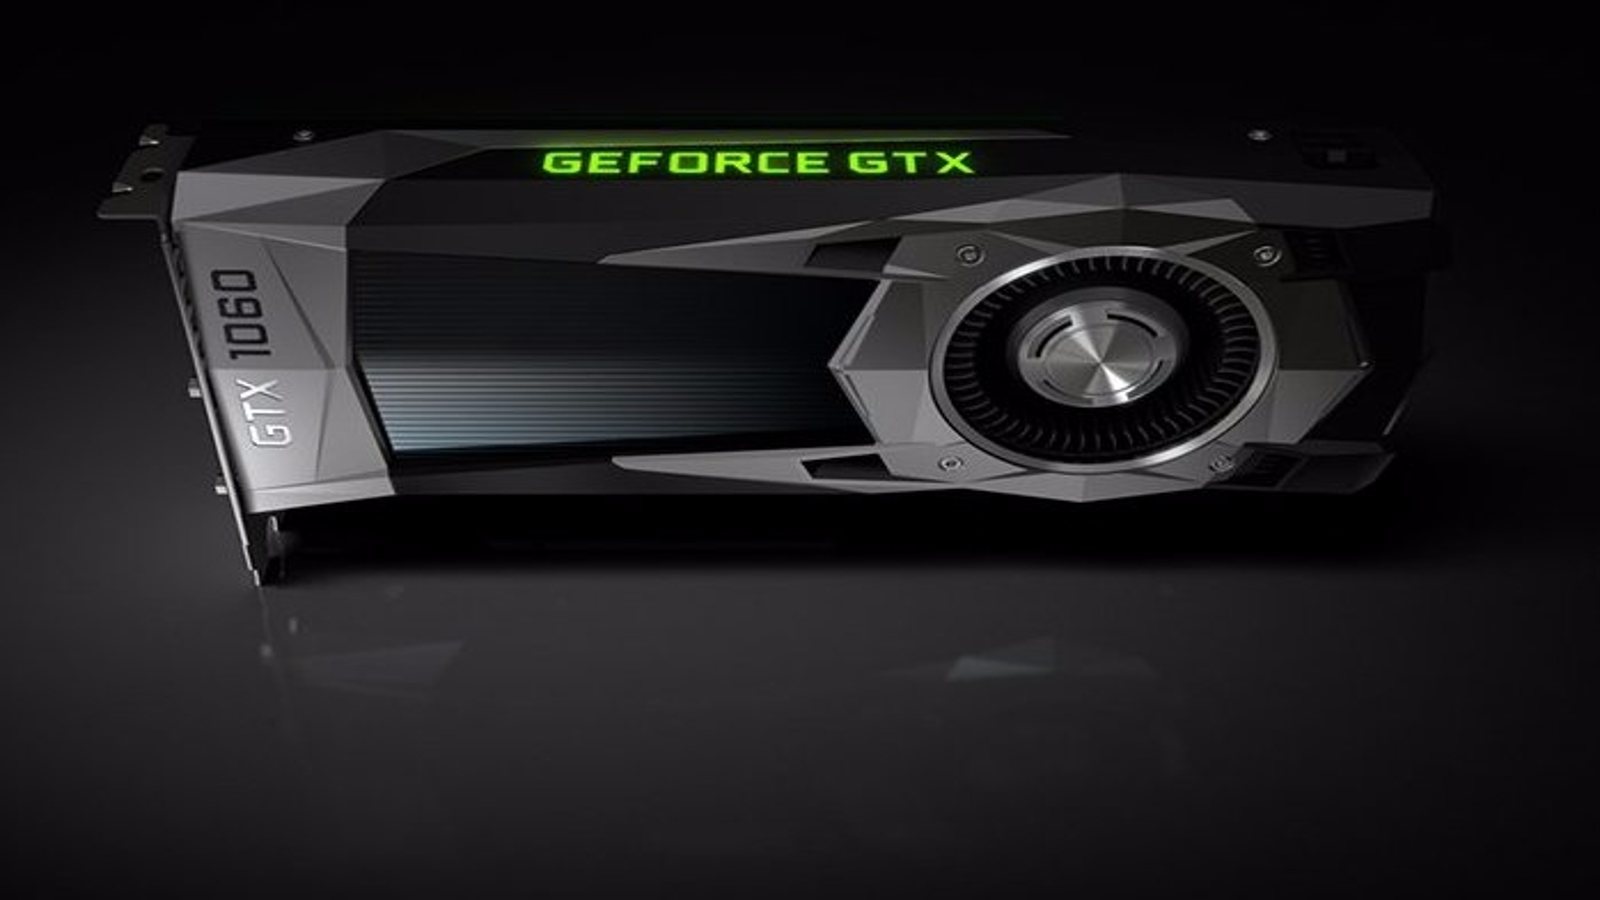 replica Duur steak Nvidia GeForce GTX 1060 review - De ultieme mainstream grafische kaart voor  1080p? | Eurogamer.nl